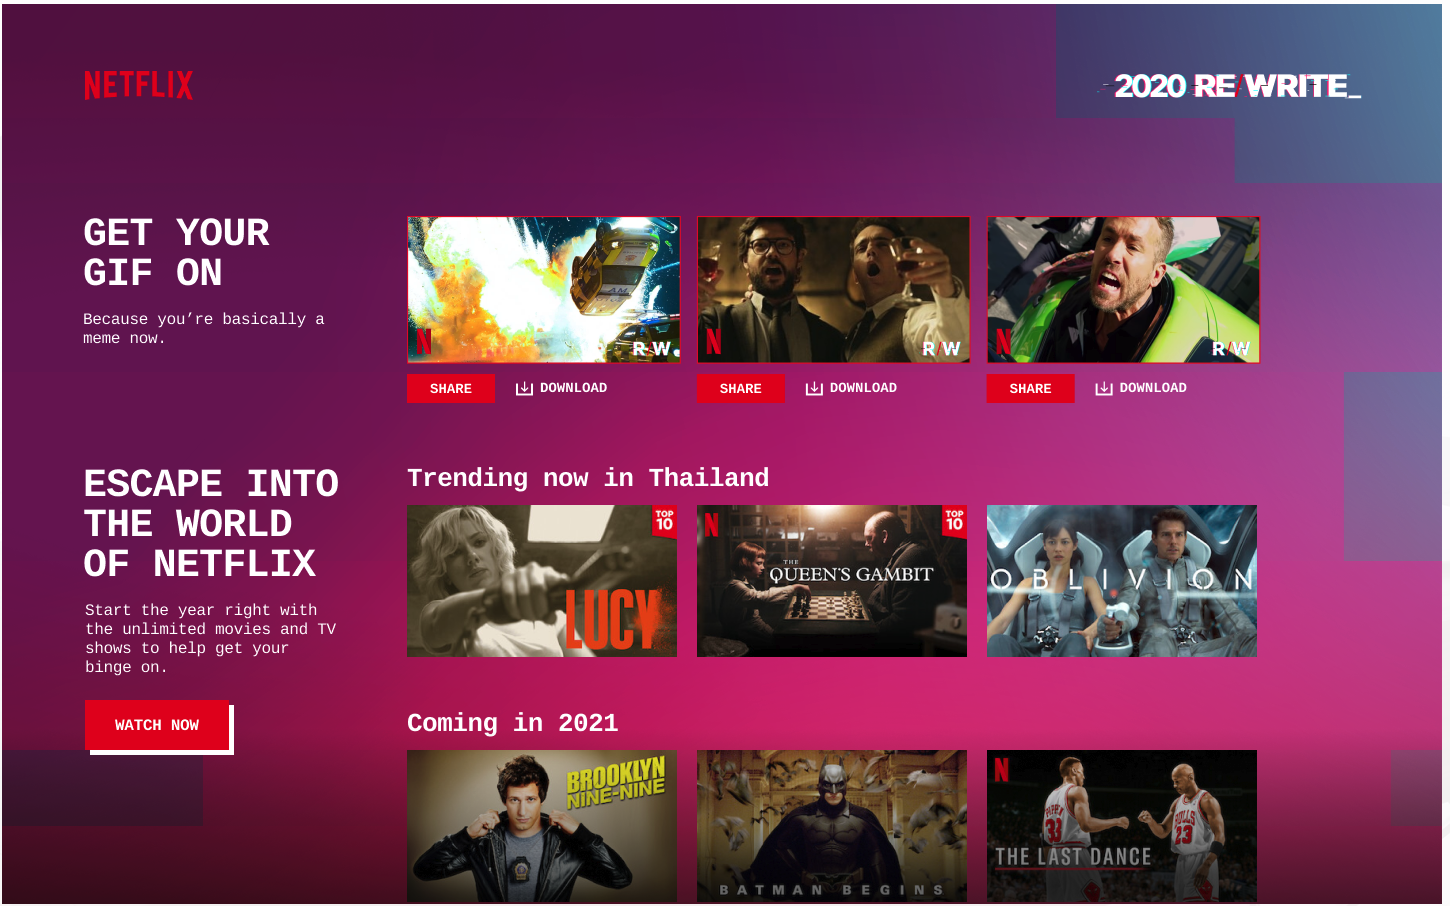 Netflix-2020ReWrite-05.png